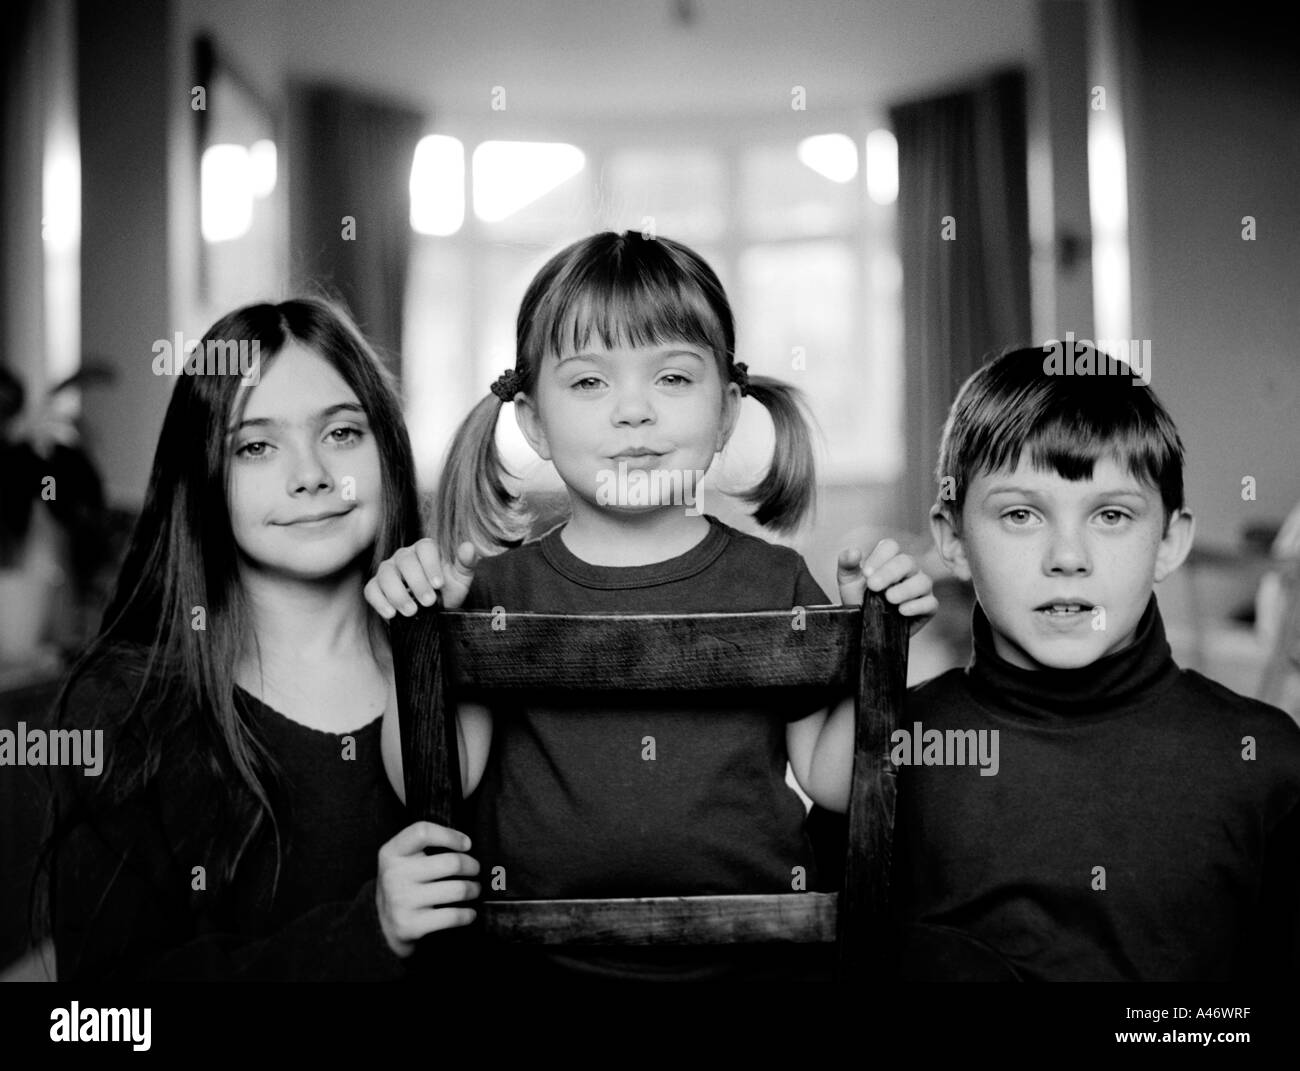 Black and white family portrait of three children Stock Photo